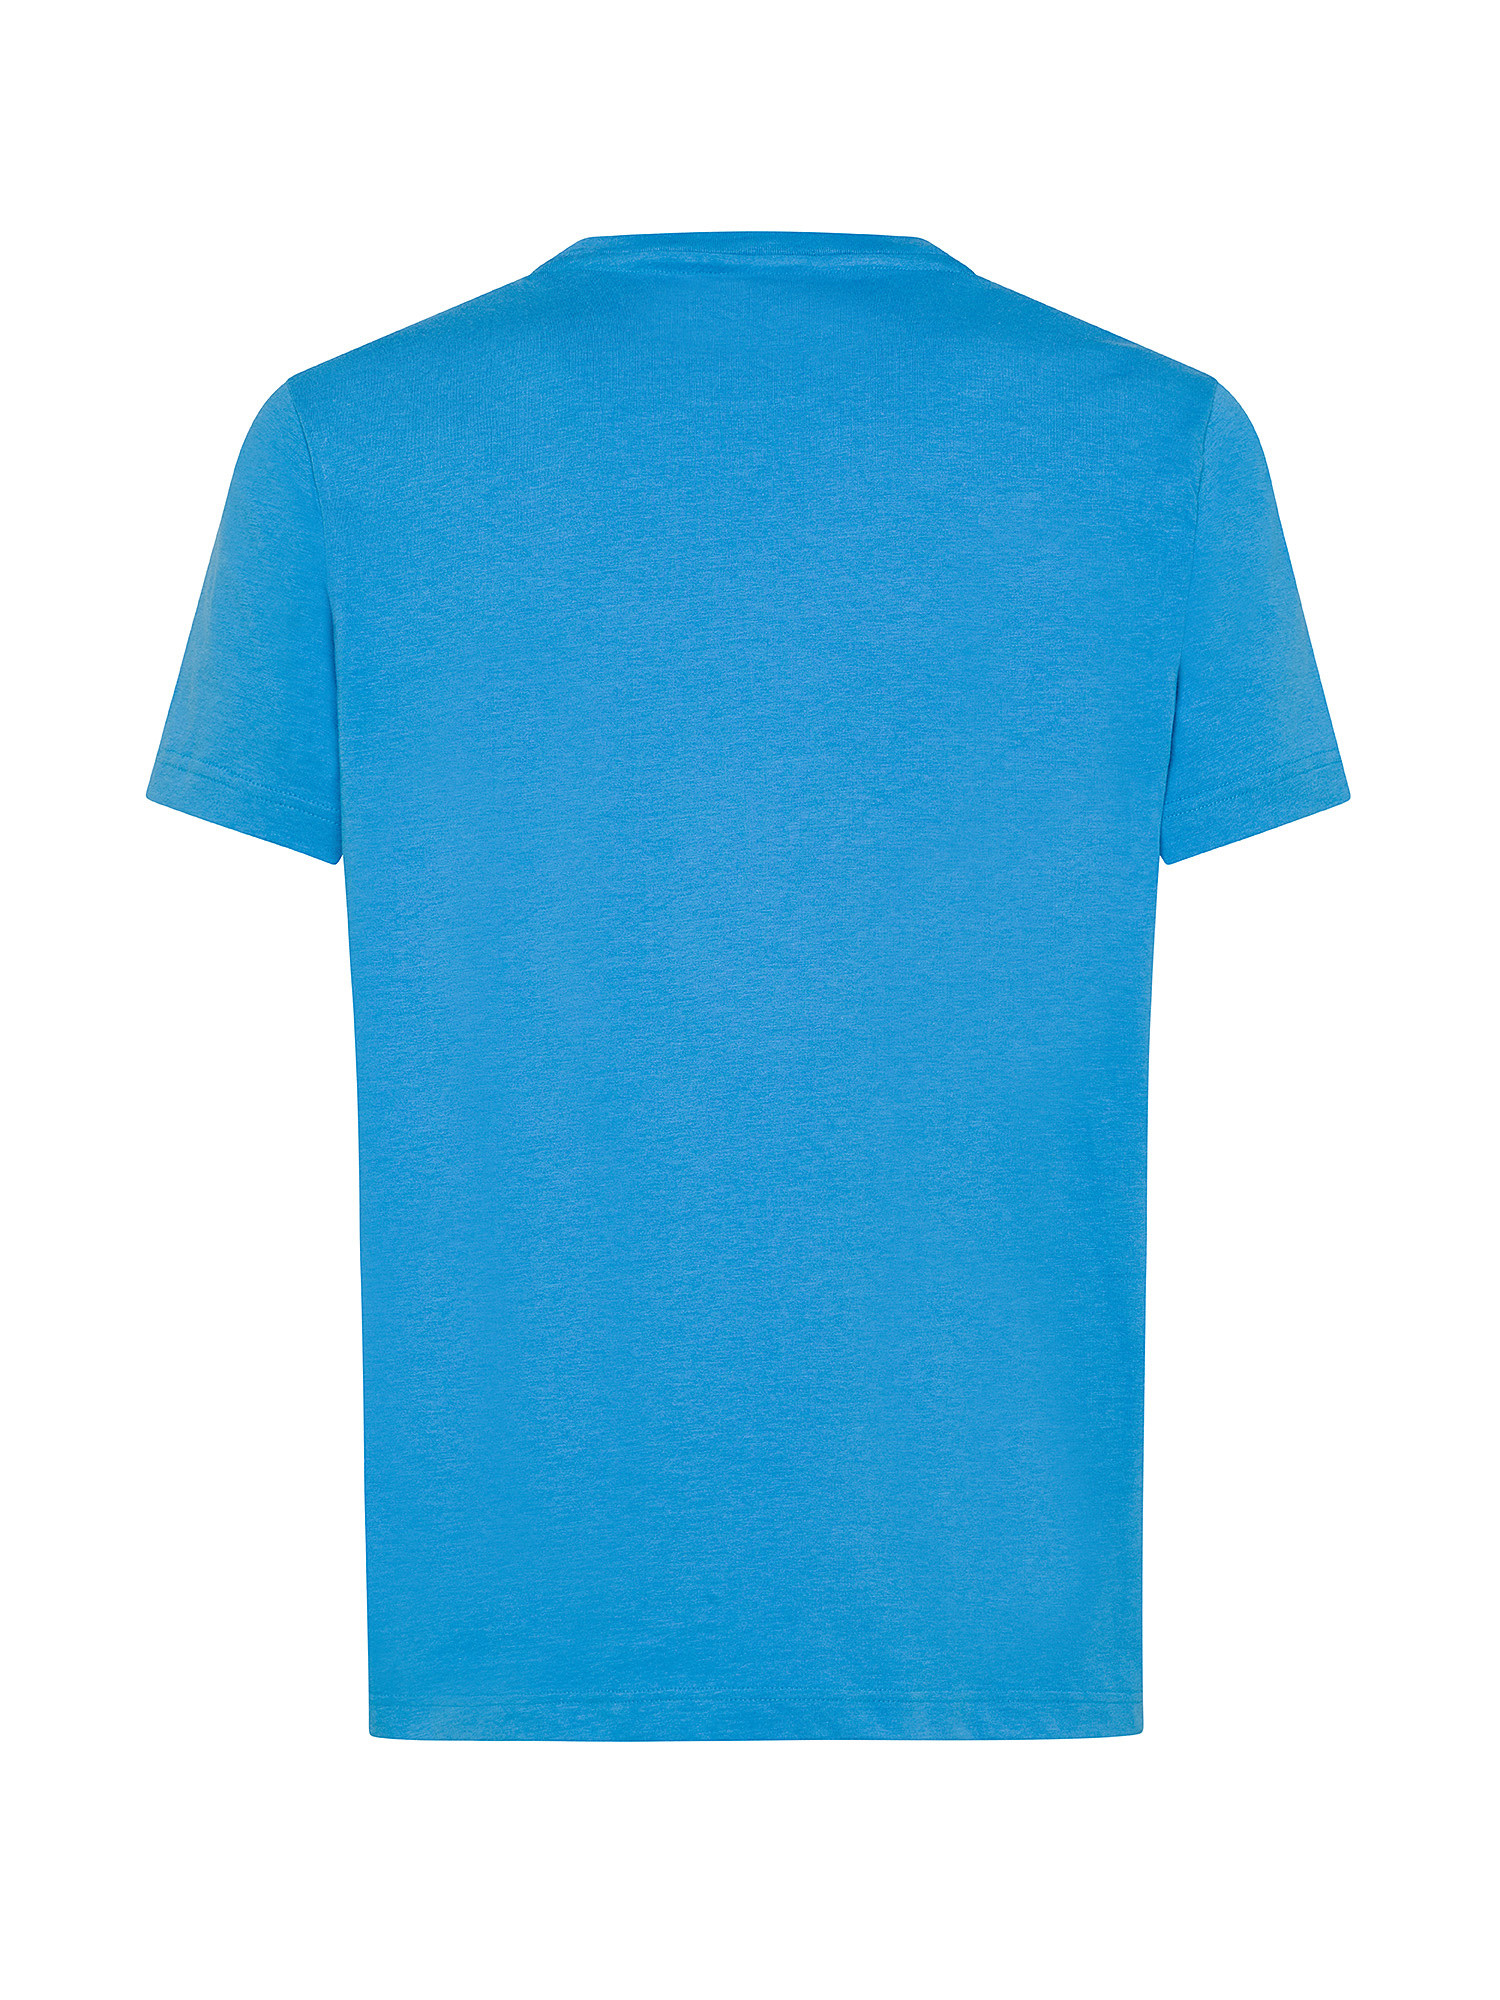 Lacoste - T-shirt sportiva regular fit, Azzurro, large image number 1